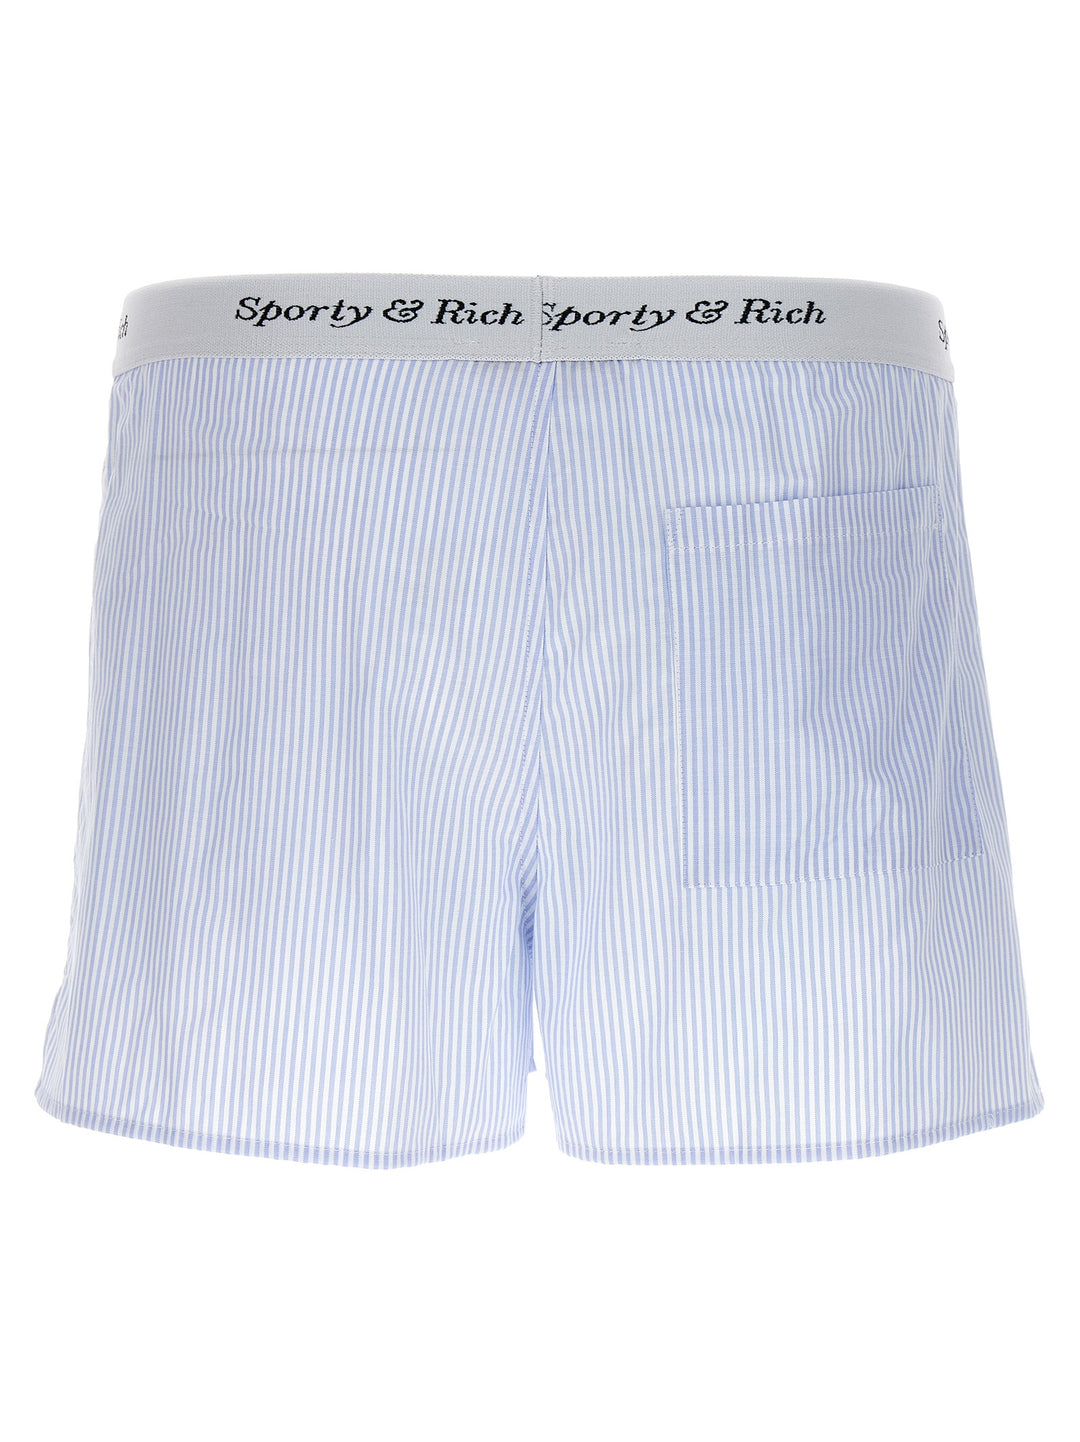 Boxer Shorts Bermuda, Short Blu